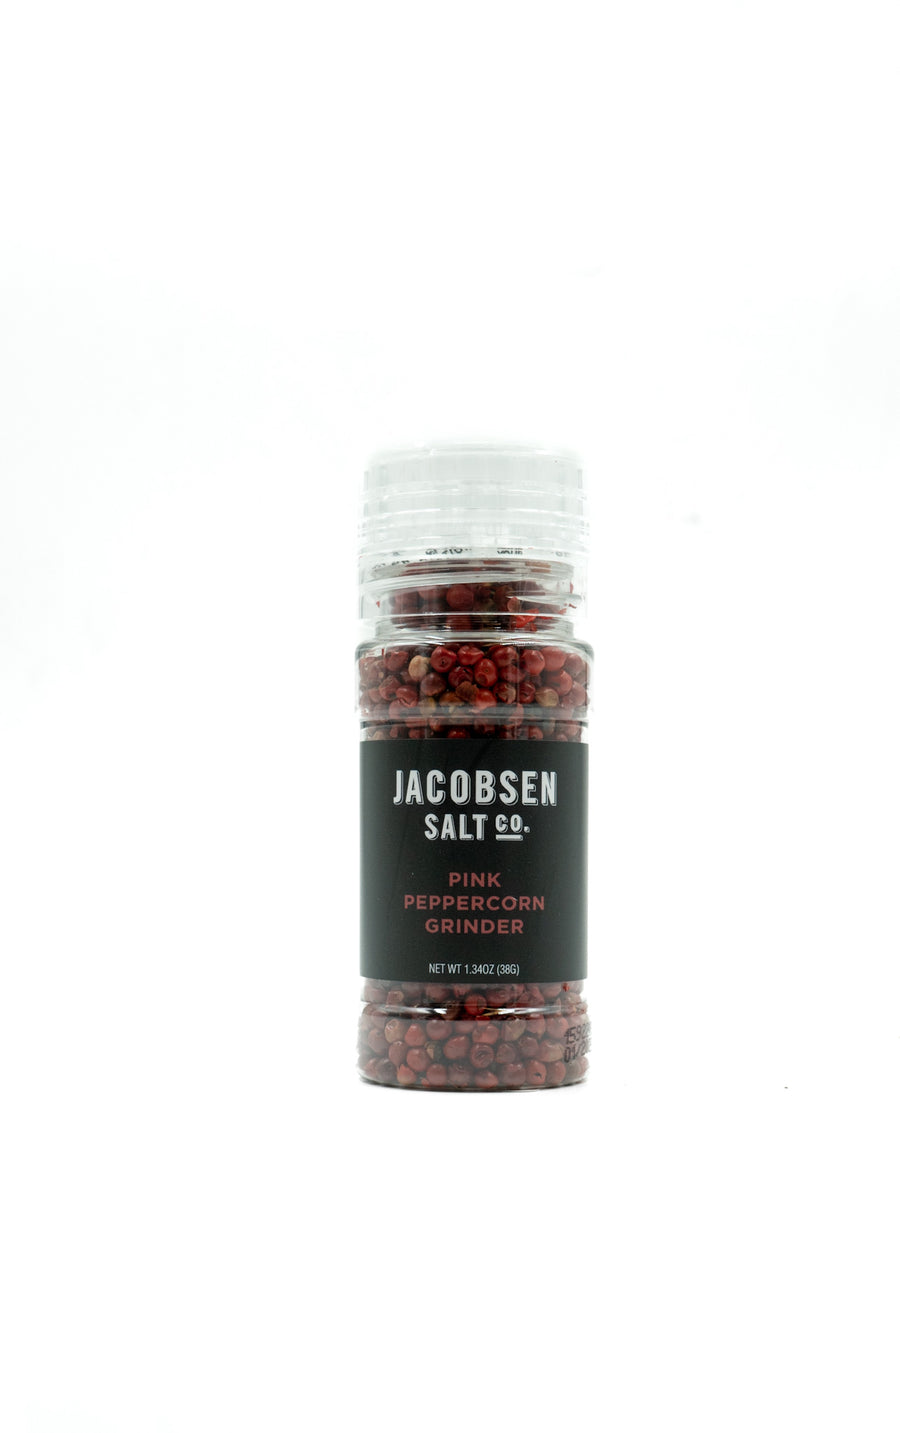 Pink Peppercorn Grinder by Jacobsen Salt Co.